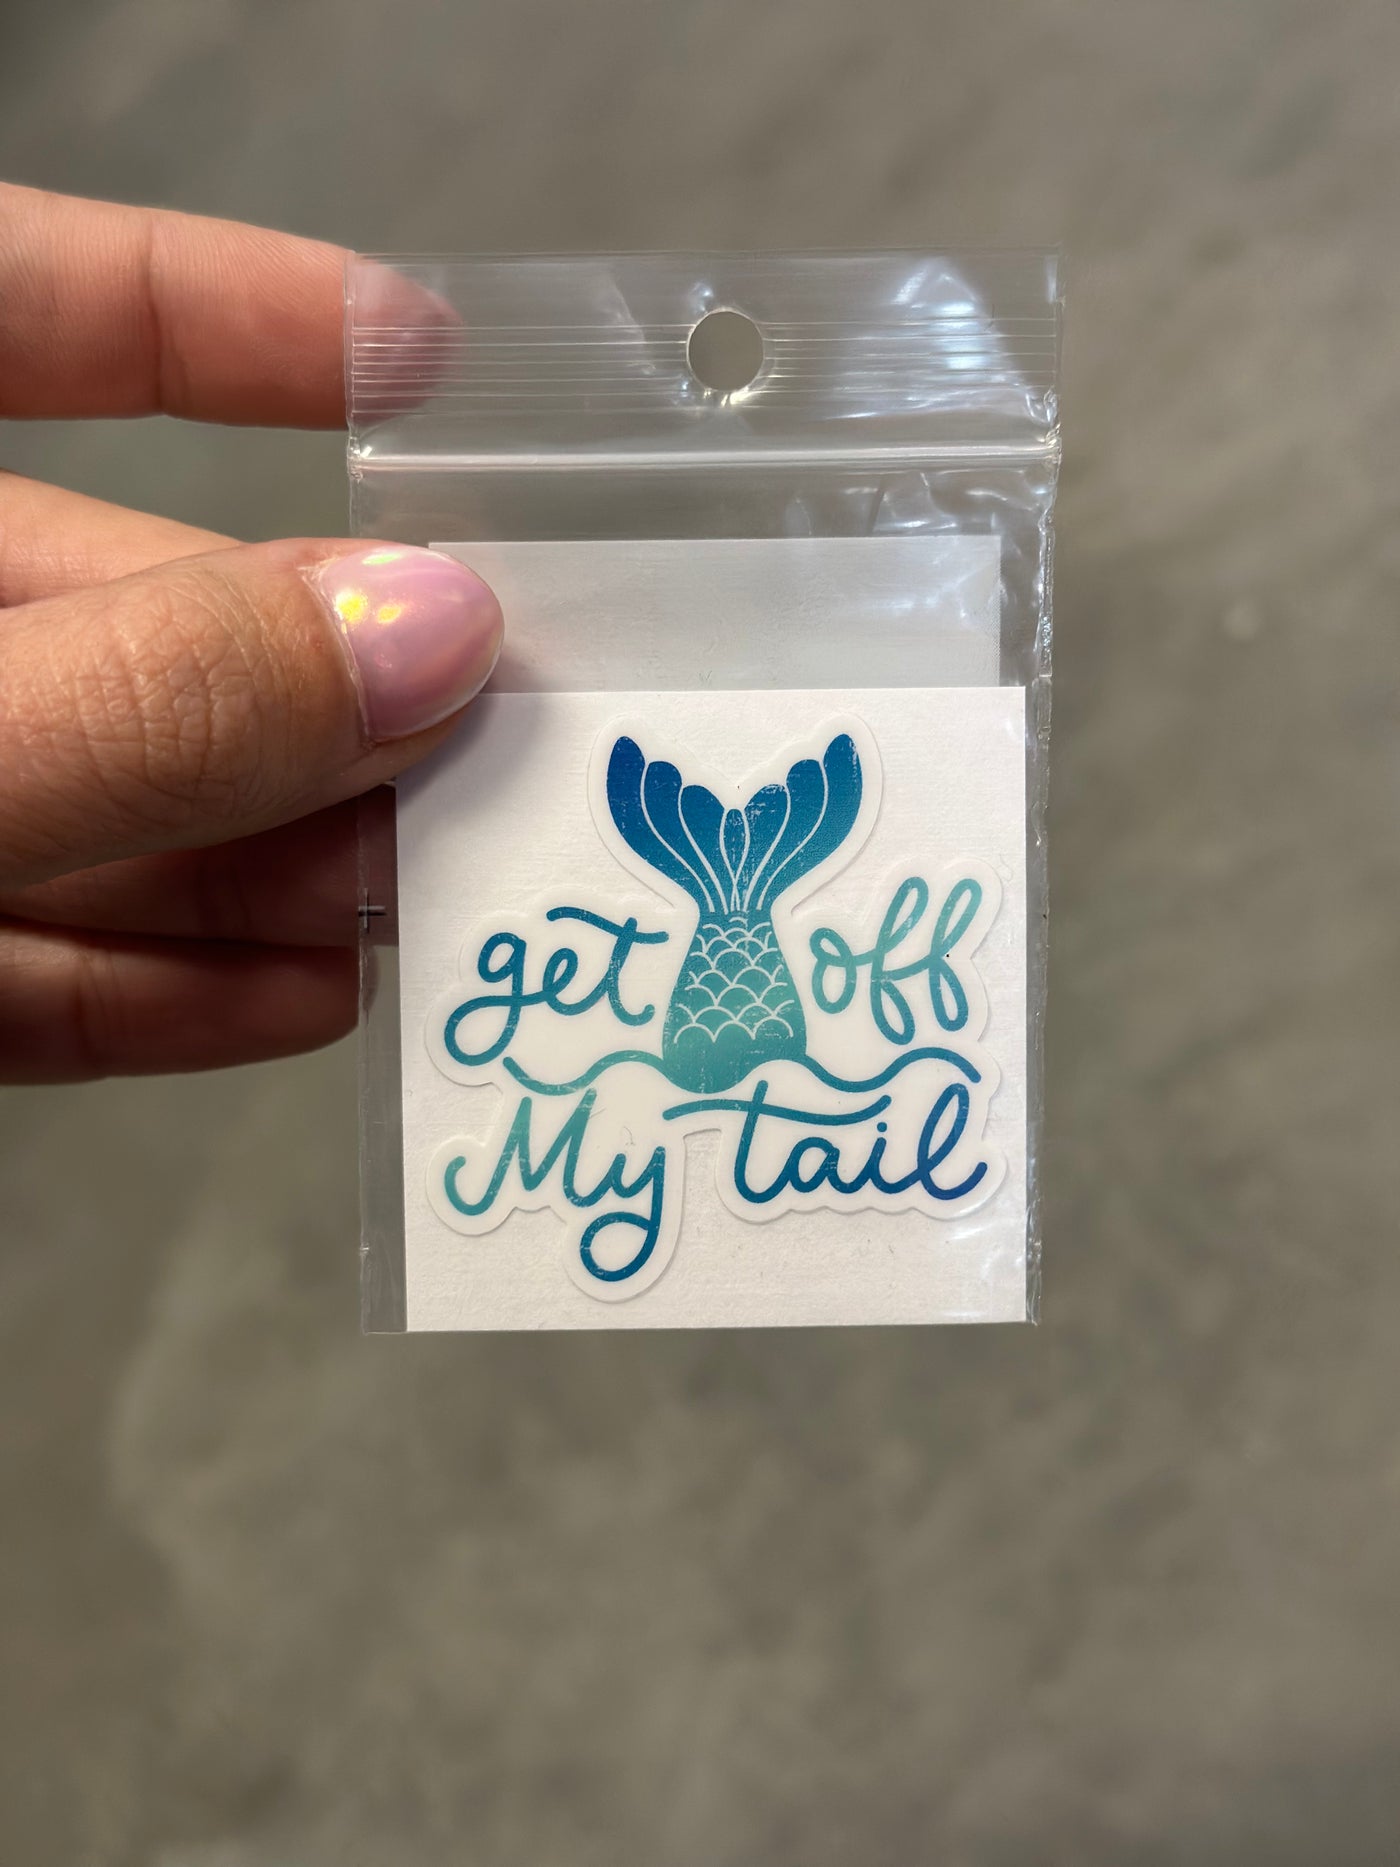 Get off my tail - Mermaid Tail Sticker